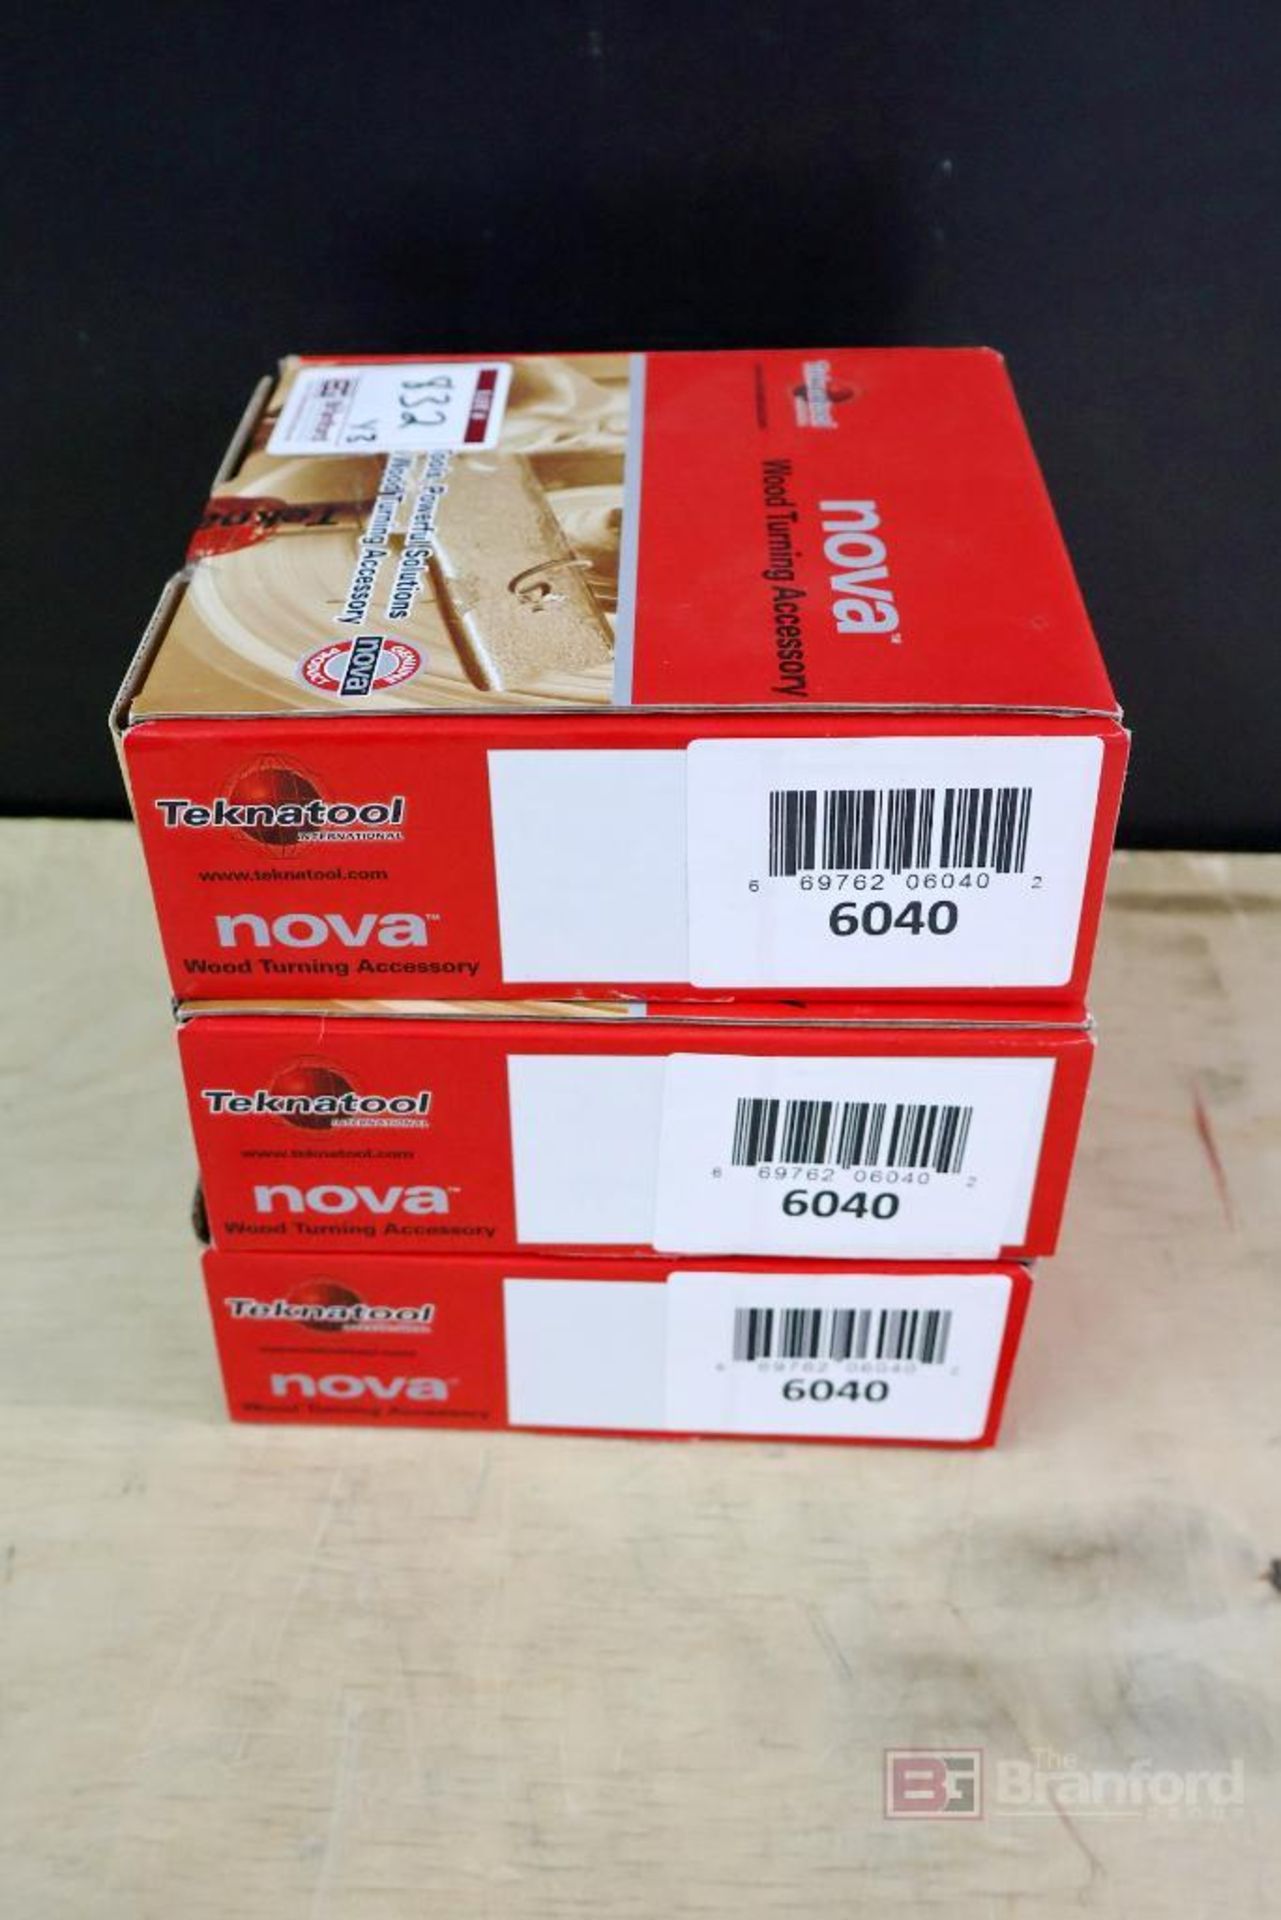 (3) NOVA 6040 Wood Turning Accessories - Image 2 of 3